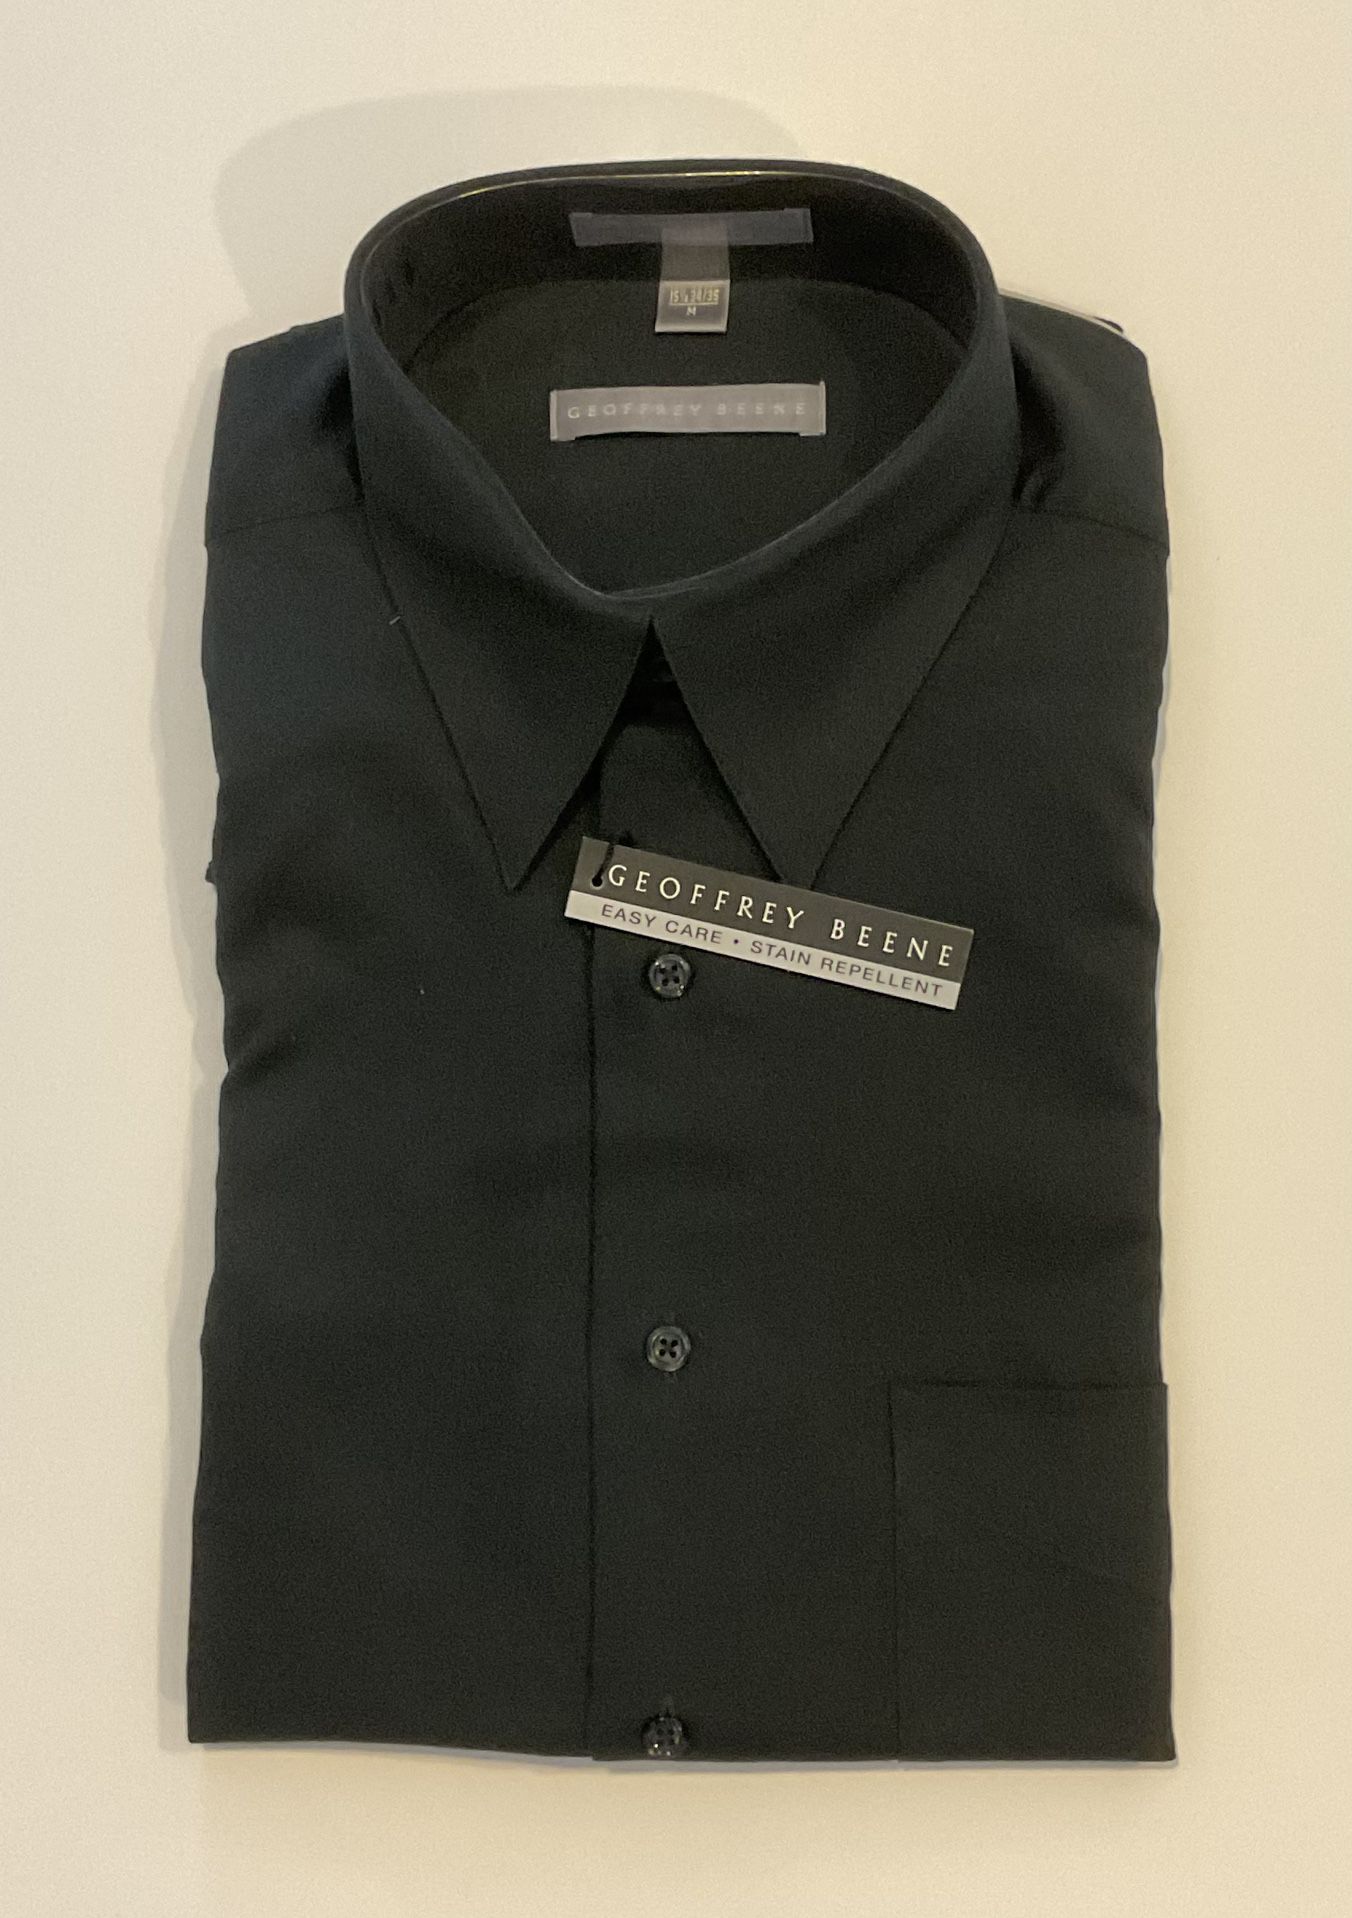 NWT Geoffrey Beene Men’s Black Long Sleeve Dress Shirt